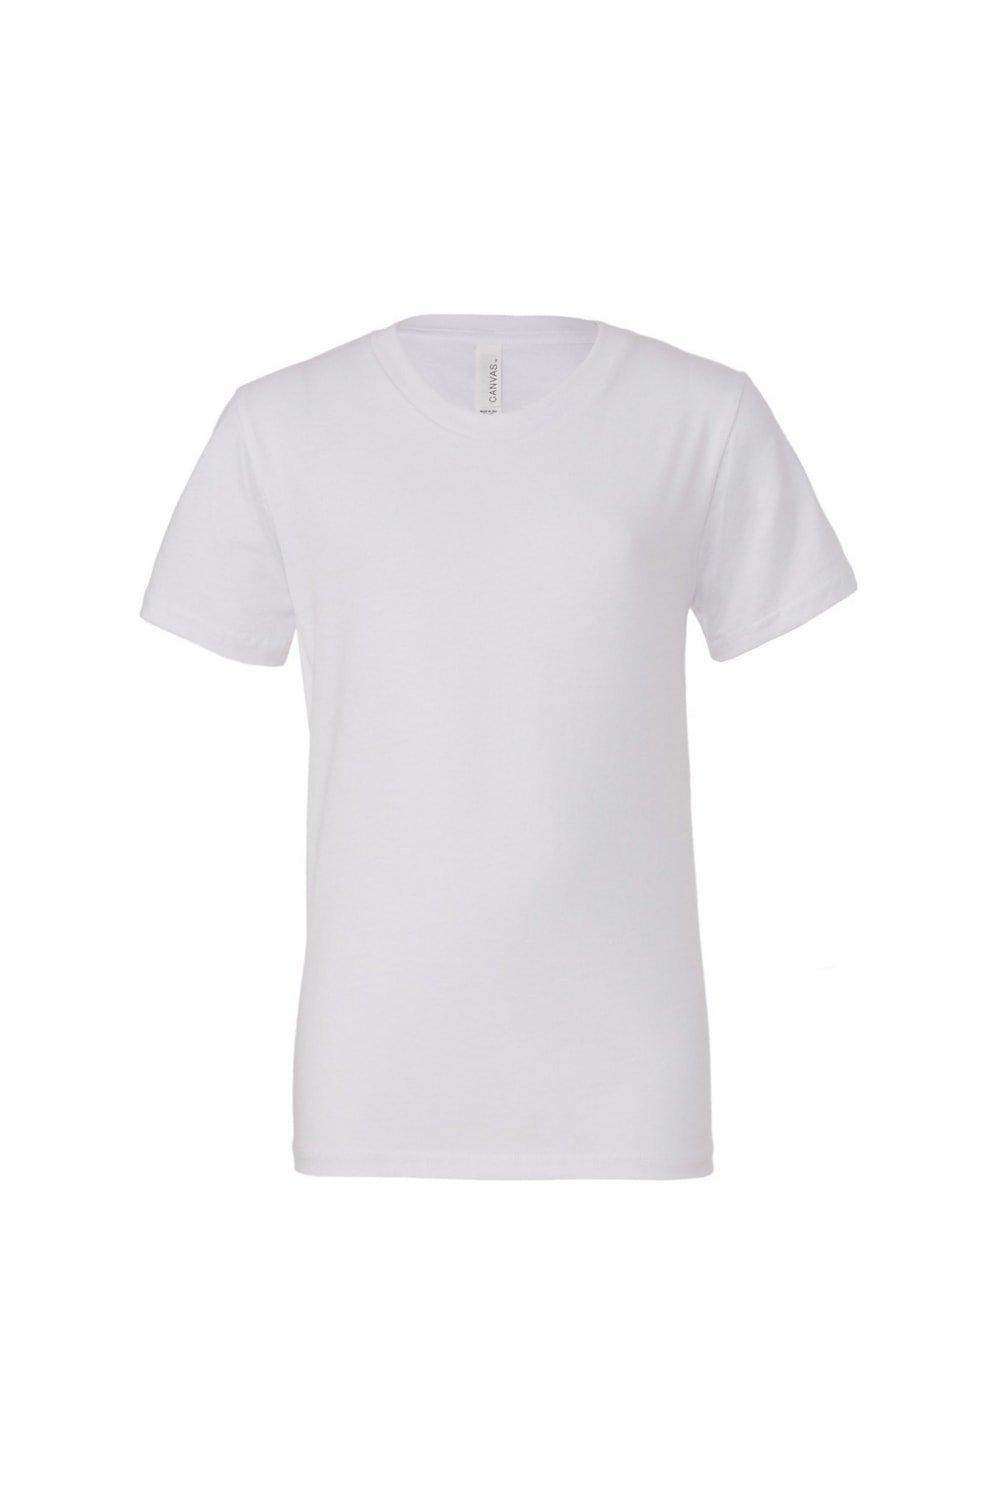 Молодежная футболка из джерси с короткими рукавами Bella + Canvas, белый цена и фото